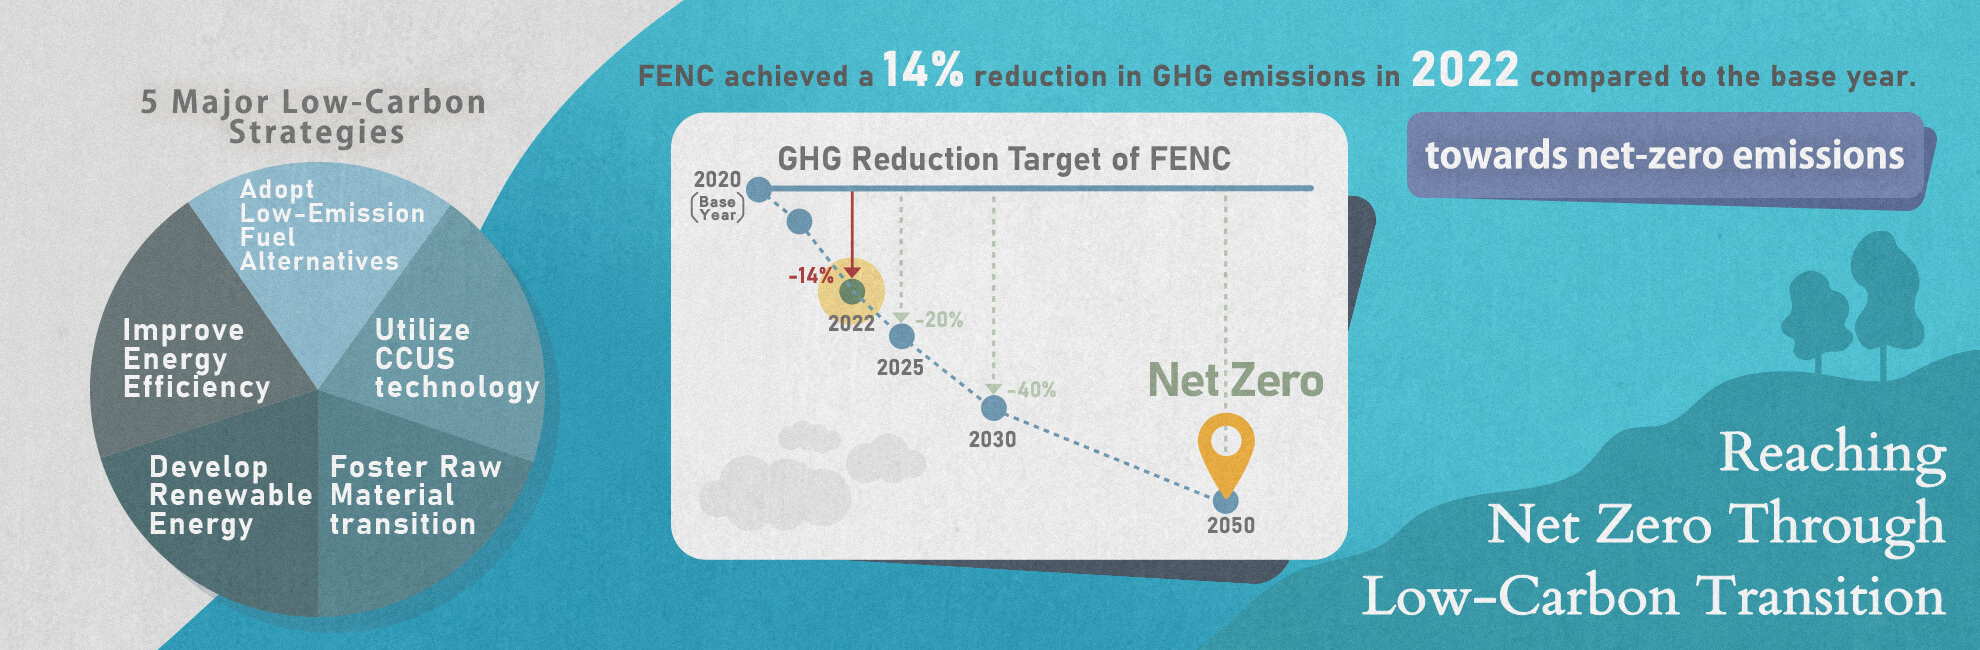 Reaching Net Zero Through Low-Carbon Transition